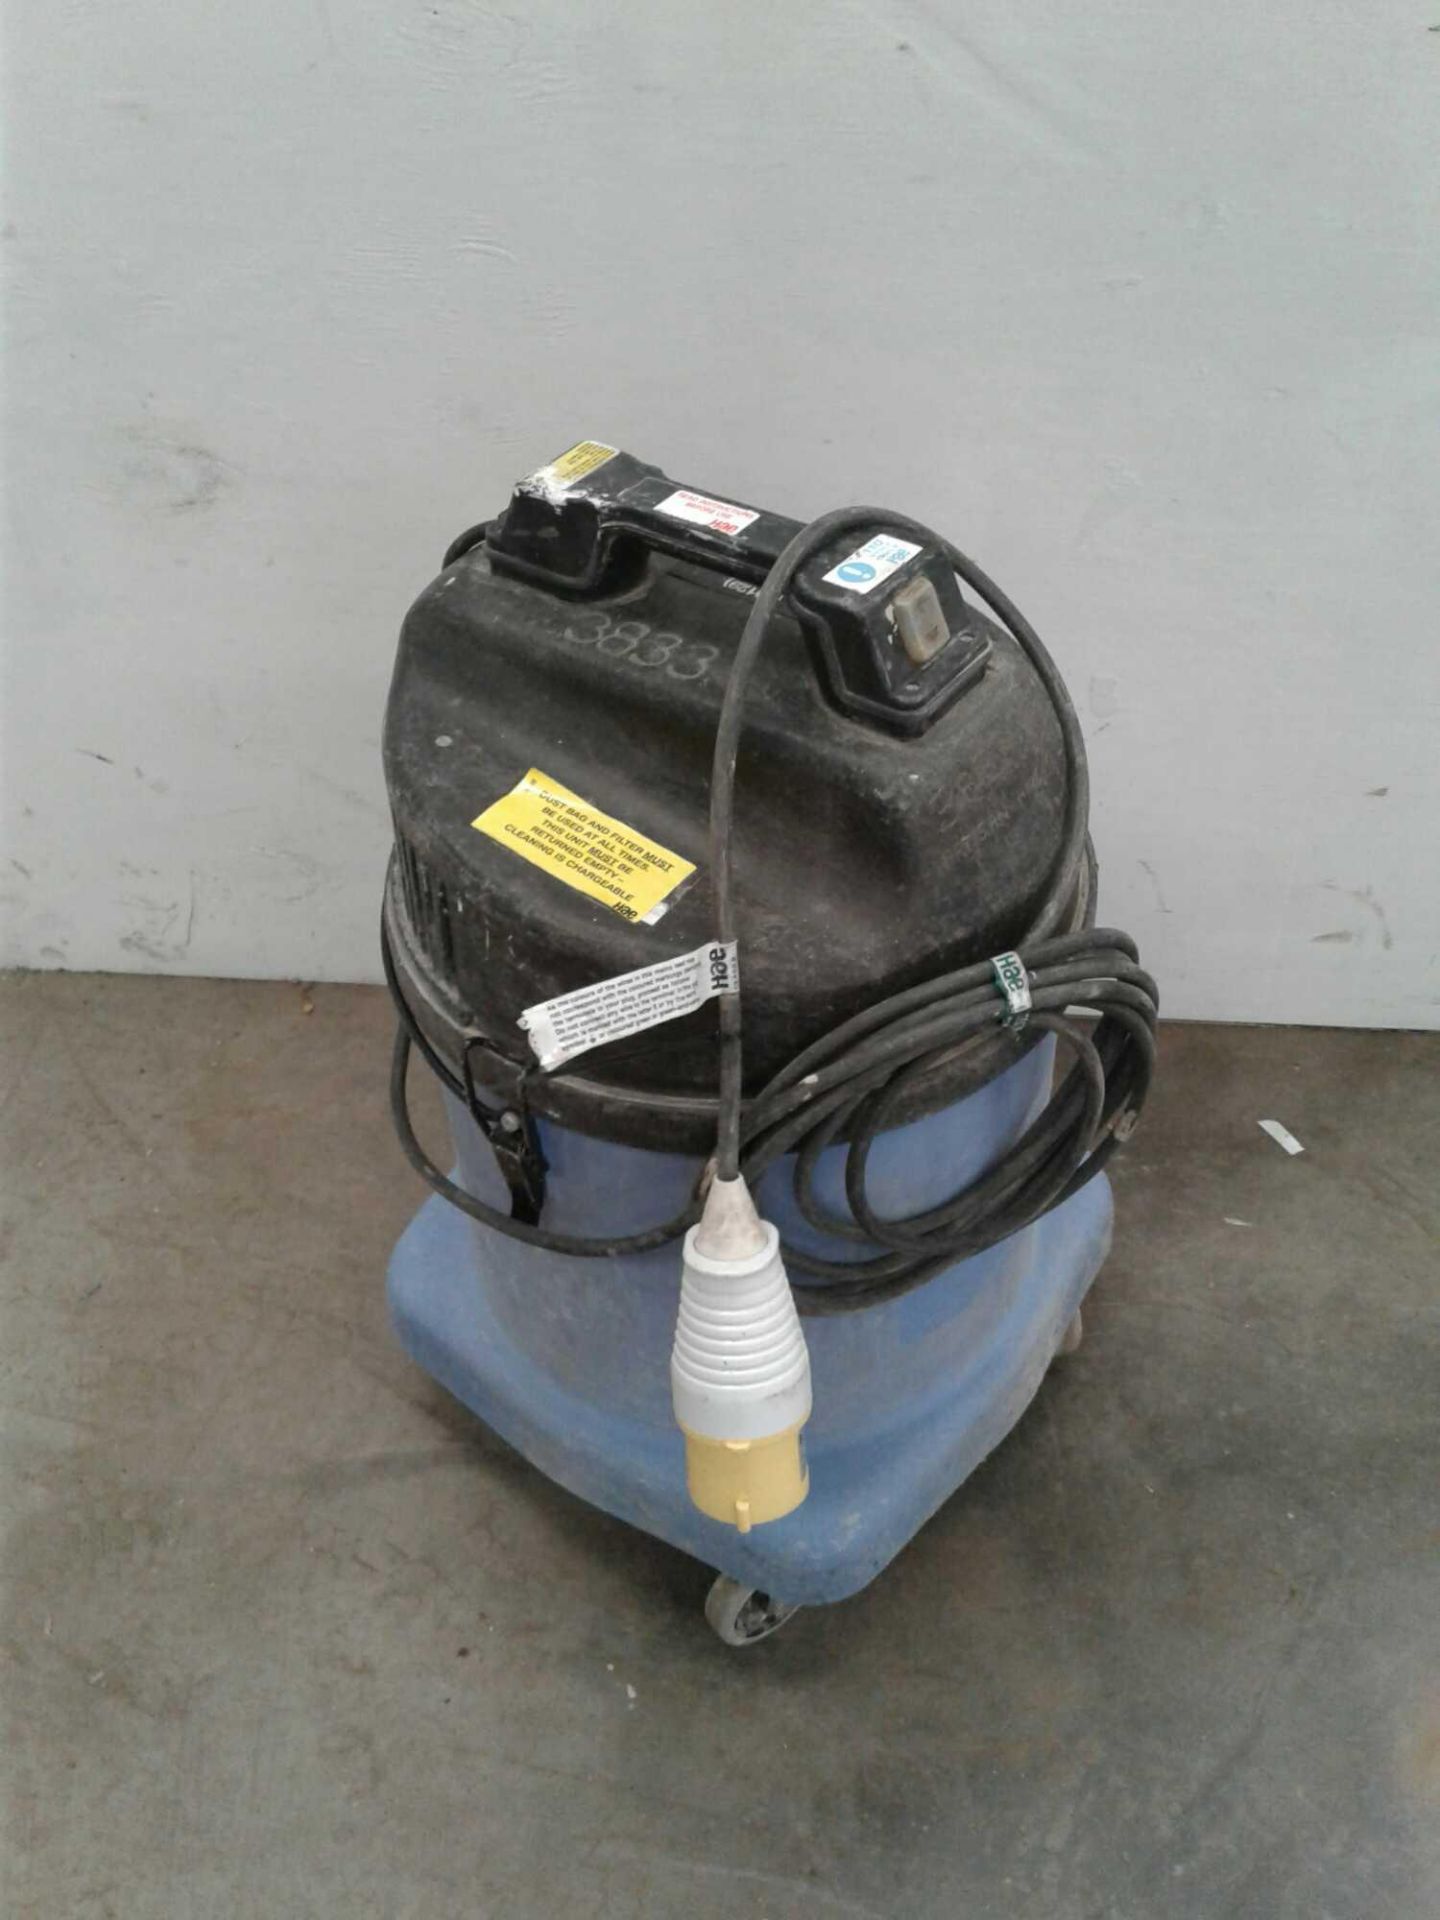 Industrial vacuum cleaner 110 V 32 amp - Image 2 of 2